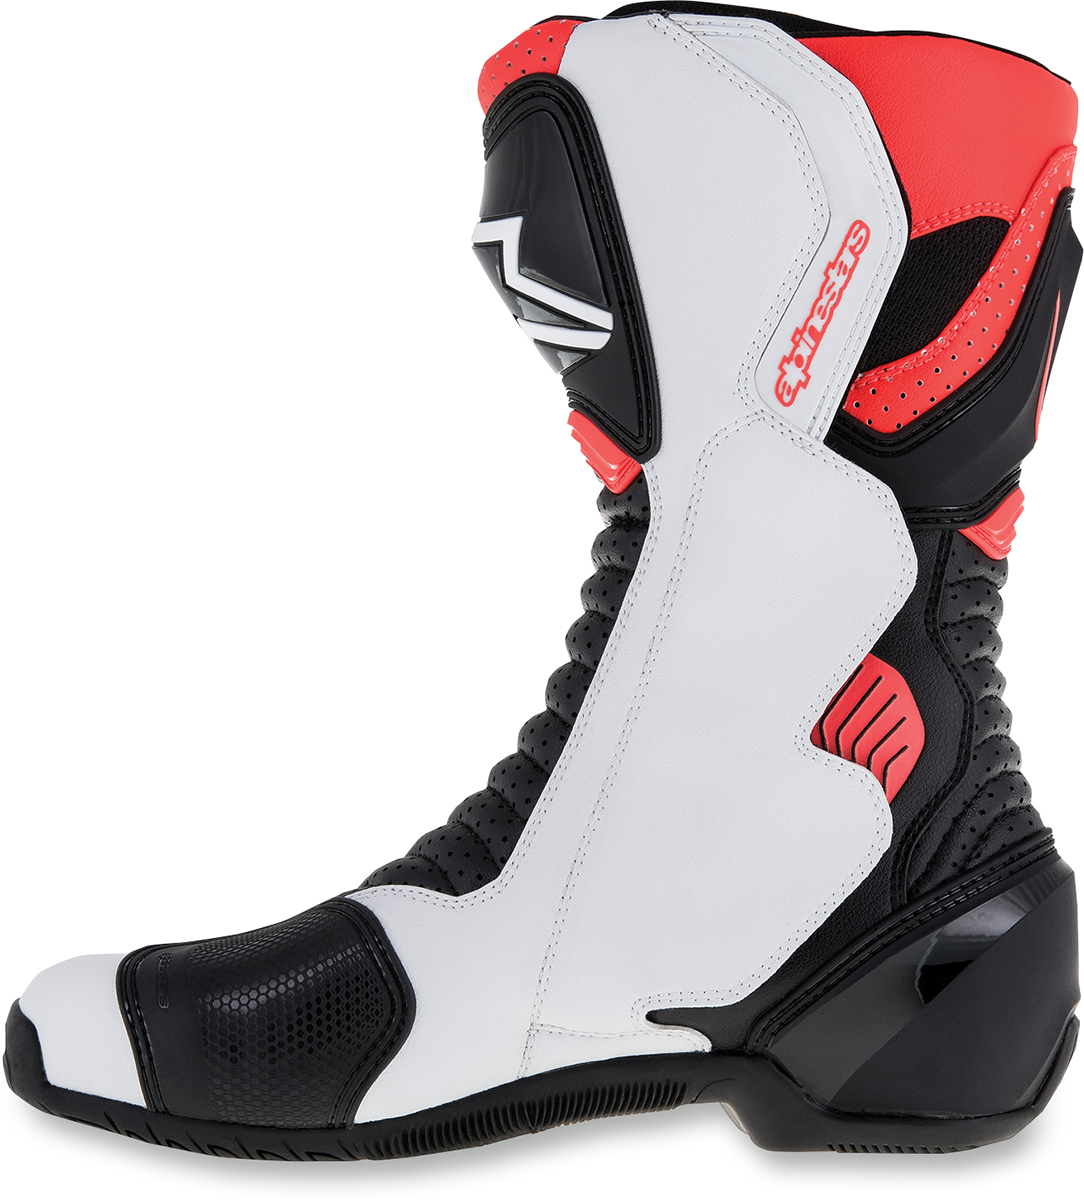 ALPINESTARS SMX-6 v2 Vented Boots - Black/White/Red Fluorescent - US 7.5 / EU 41 2223017-1320-41